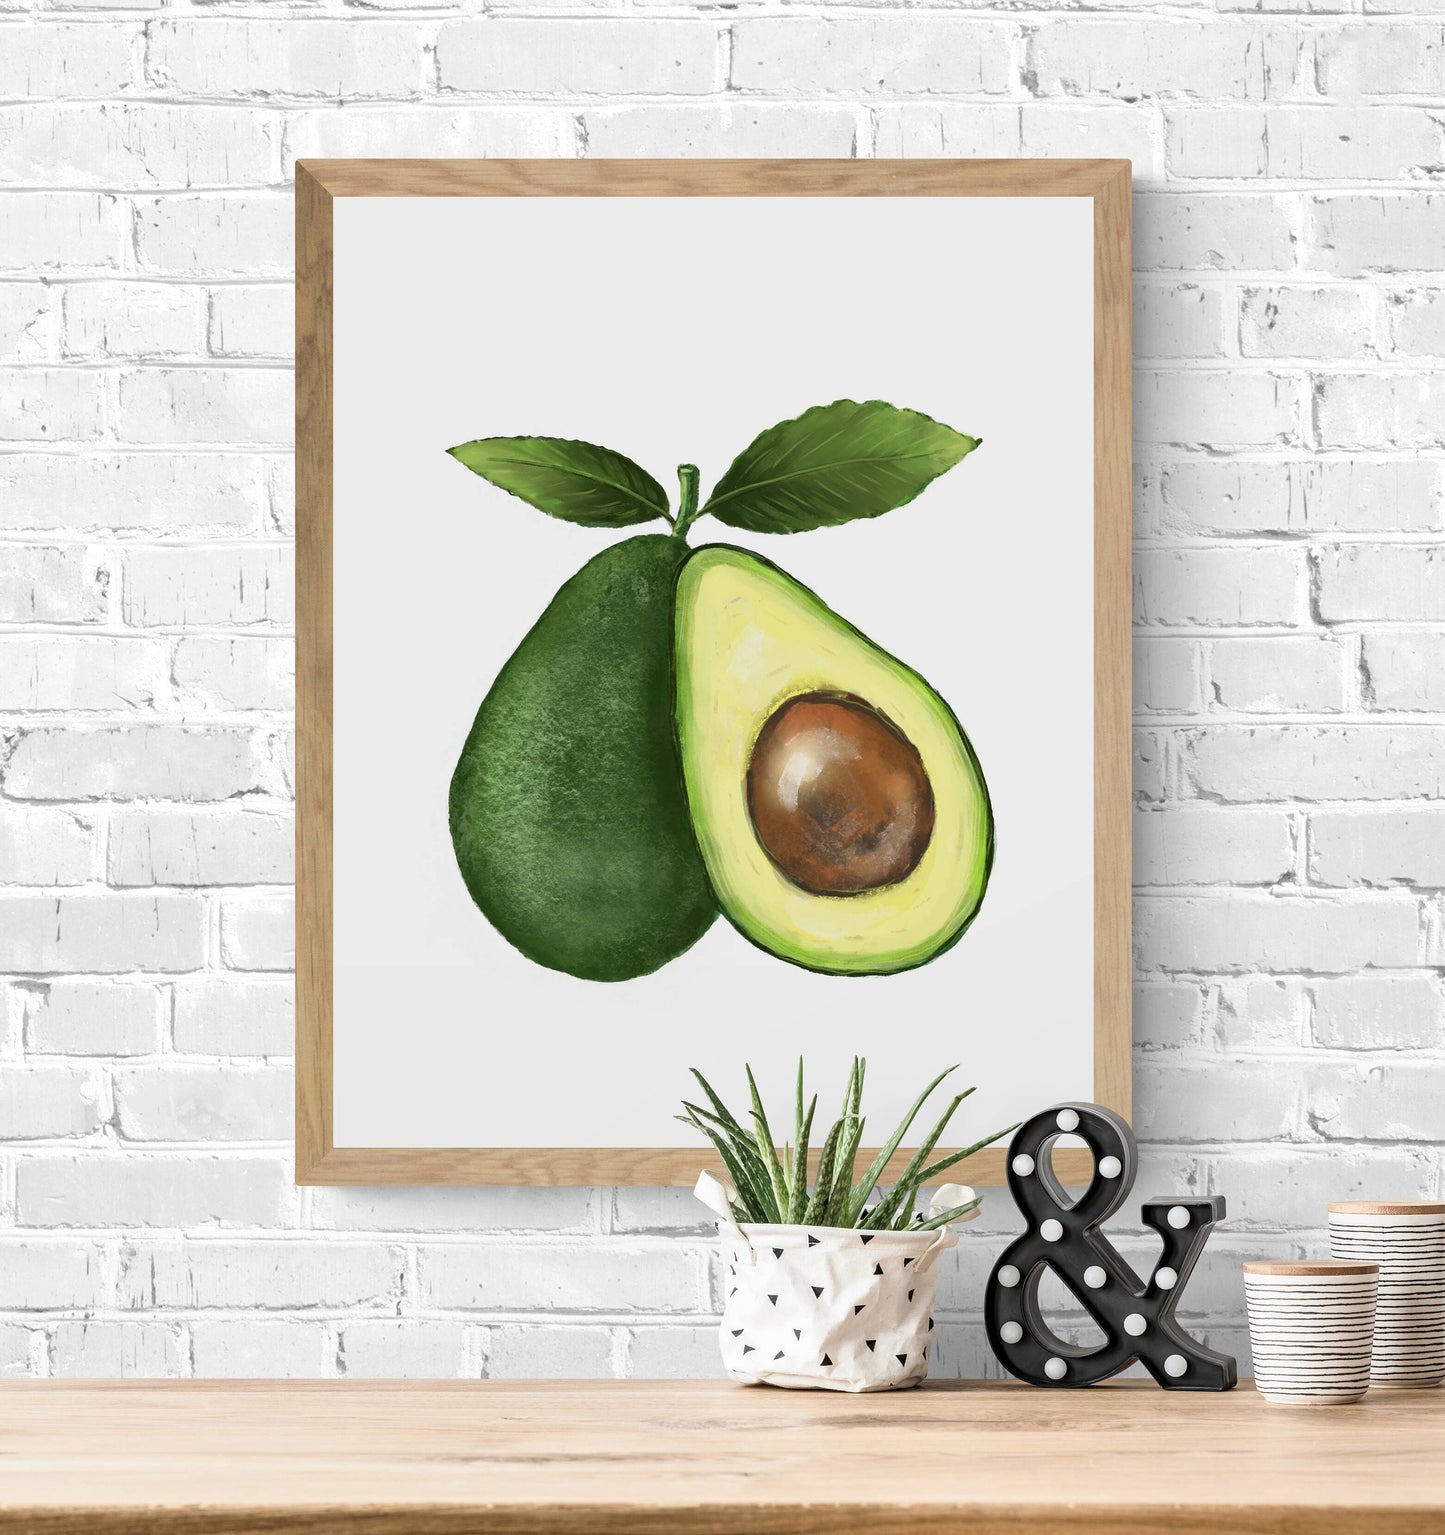 Avocado Art Print, Avocado Wall Art, Kitchen Wall Hanging, Dining Room Decor, Painting for Vegans, Fruit Illustration, Farmhouse Wall Decor